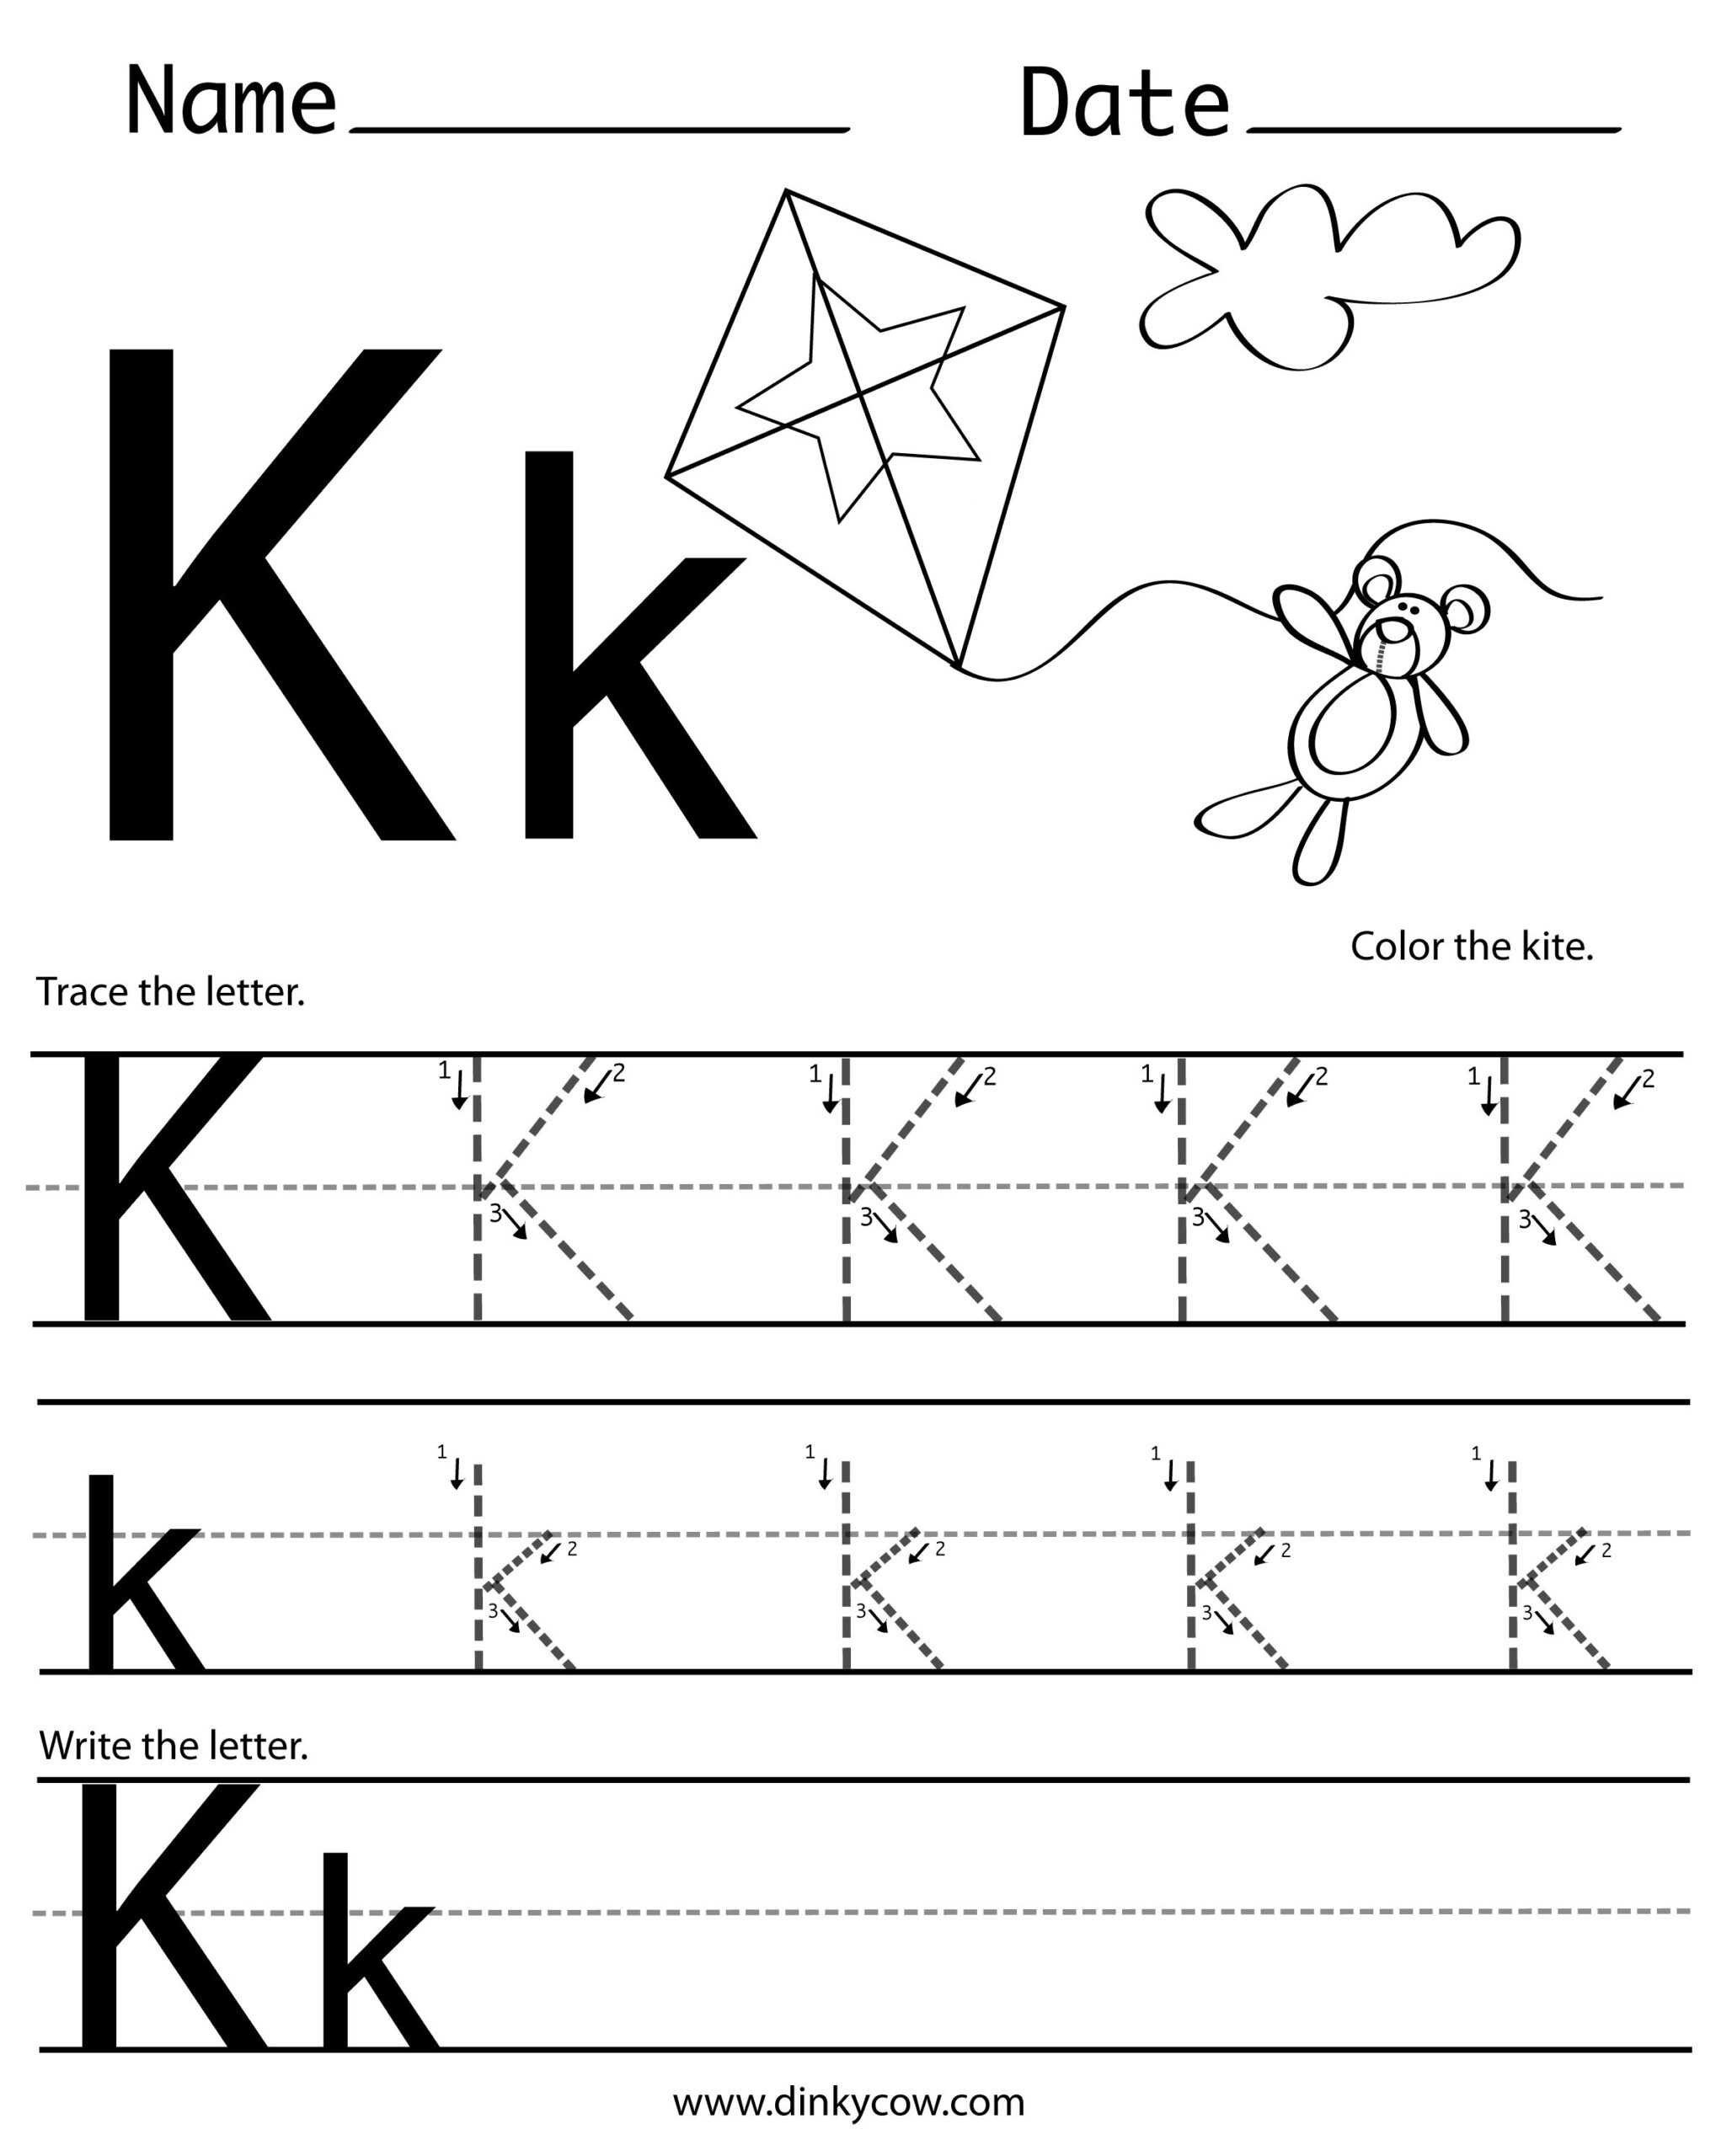 k-letter-tracing-alphabetworksheetsfree